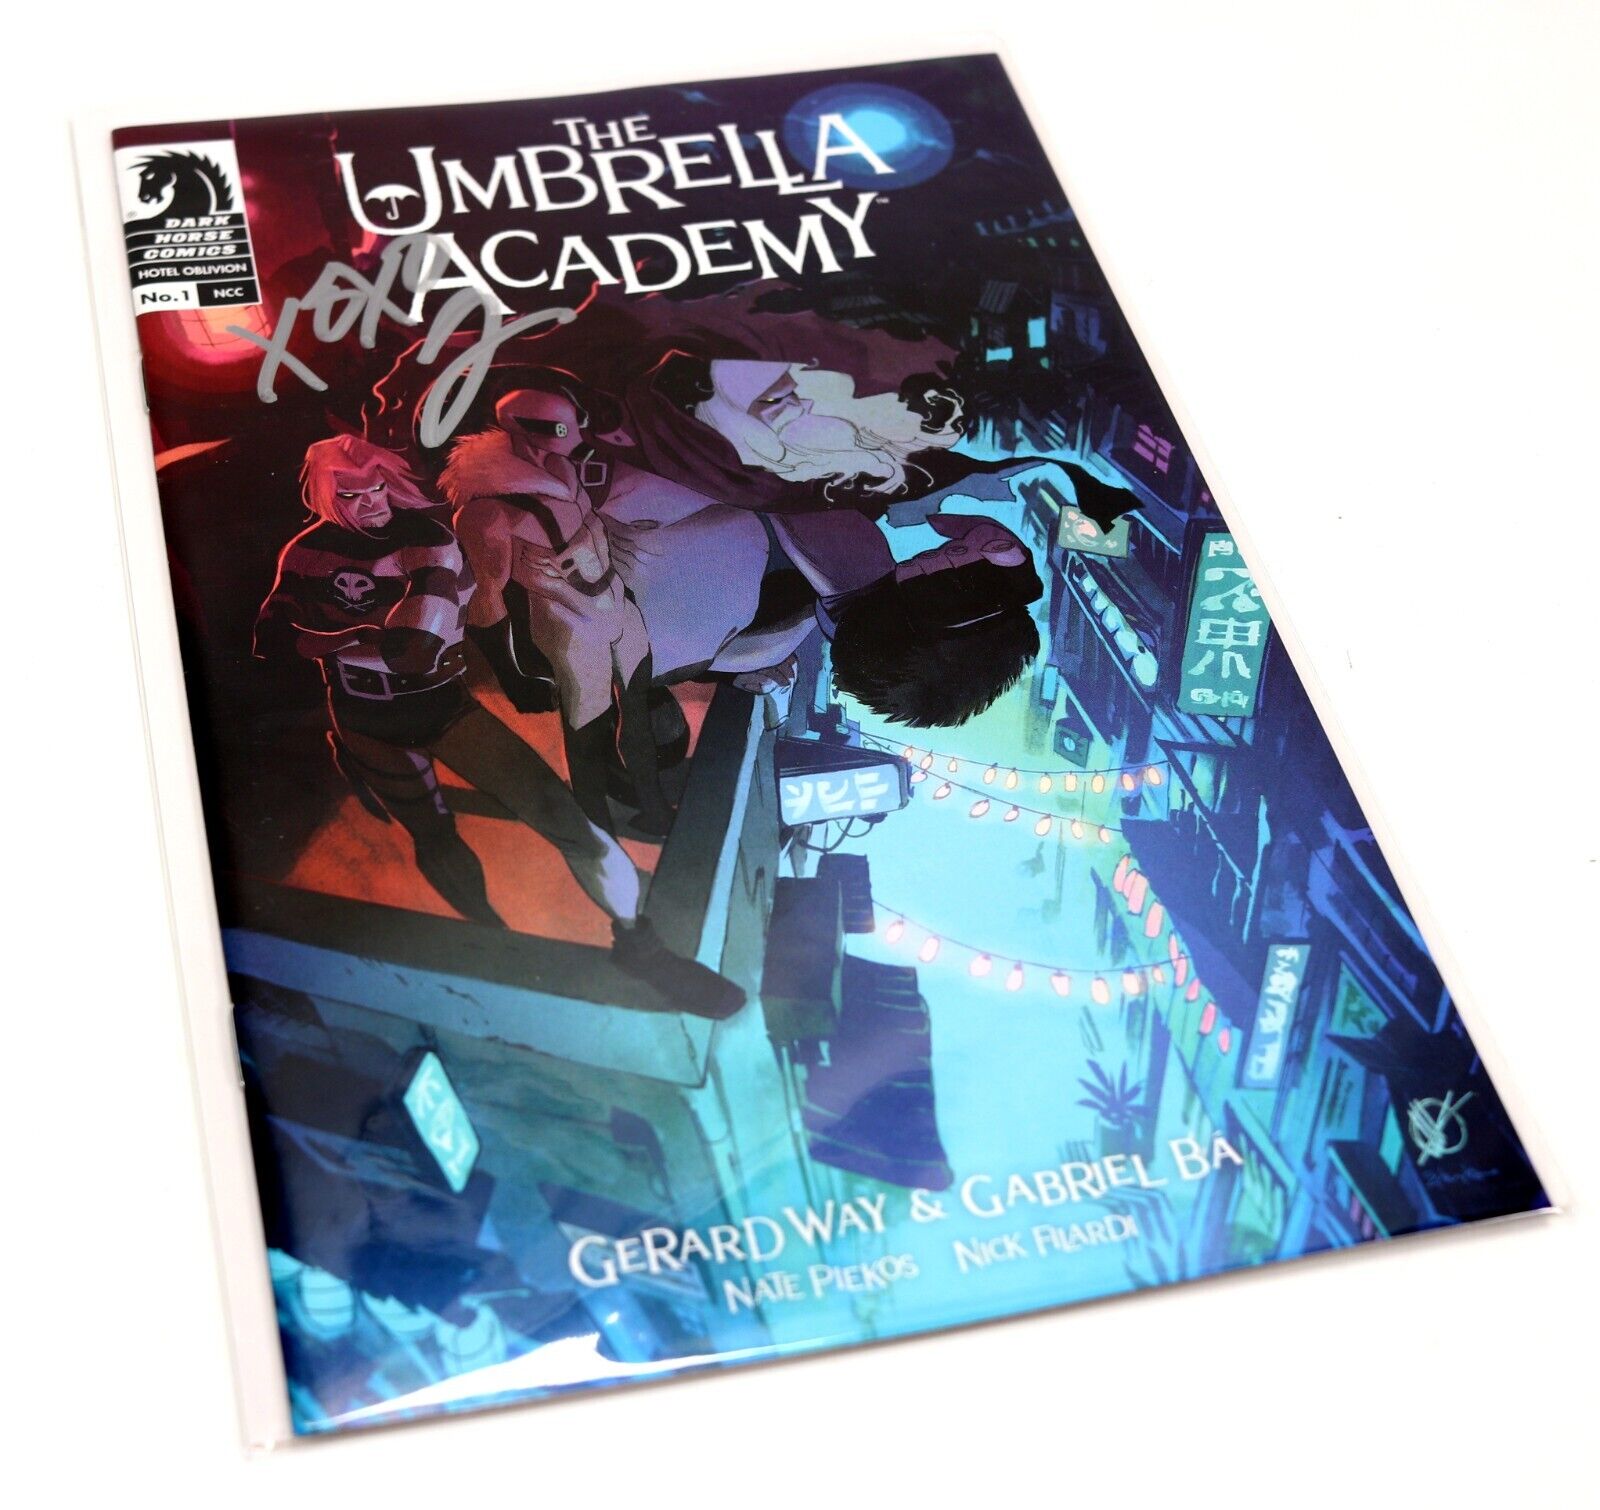 The Umbrella Academy: Hotel Oblivion # 1 Signed by Gerard Way